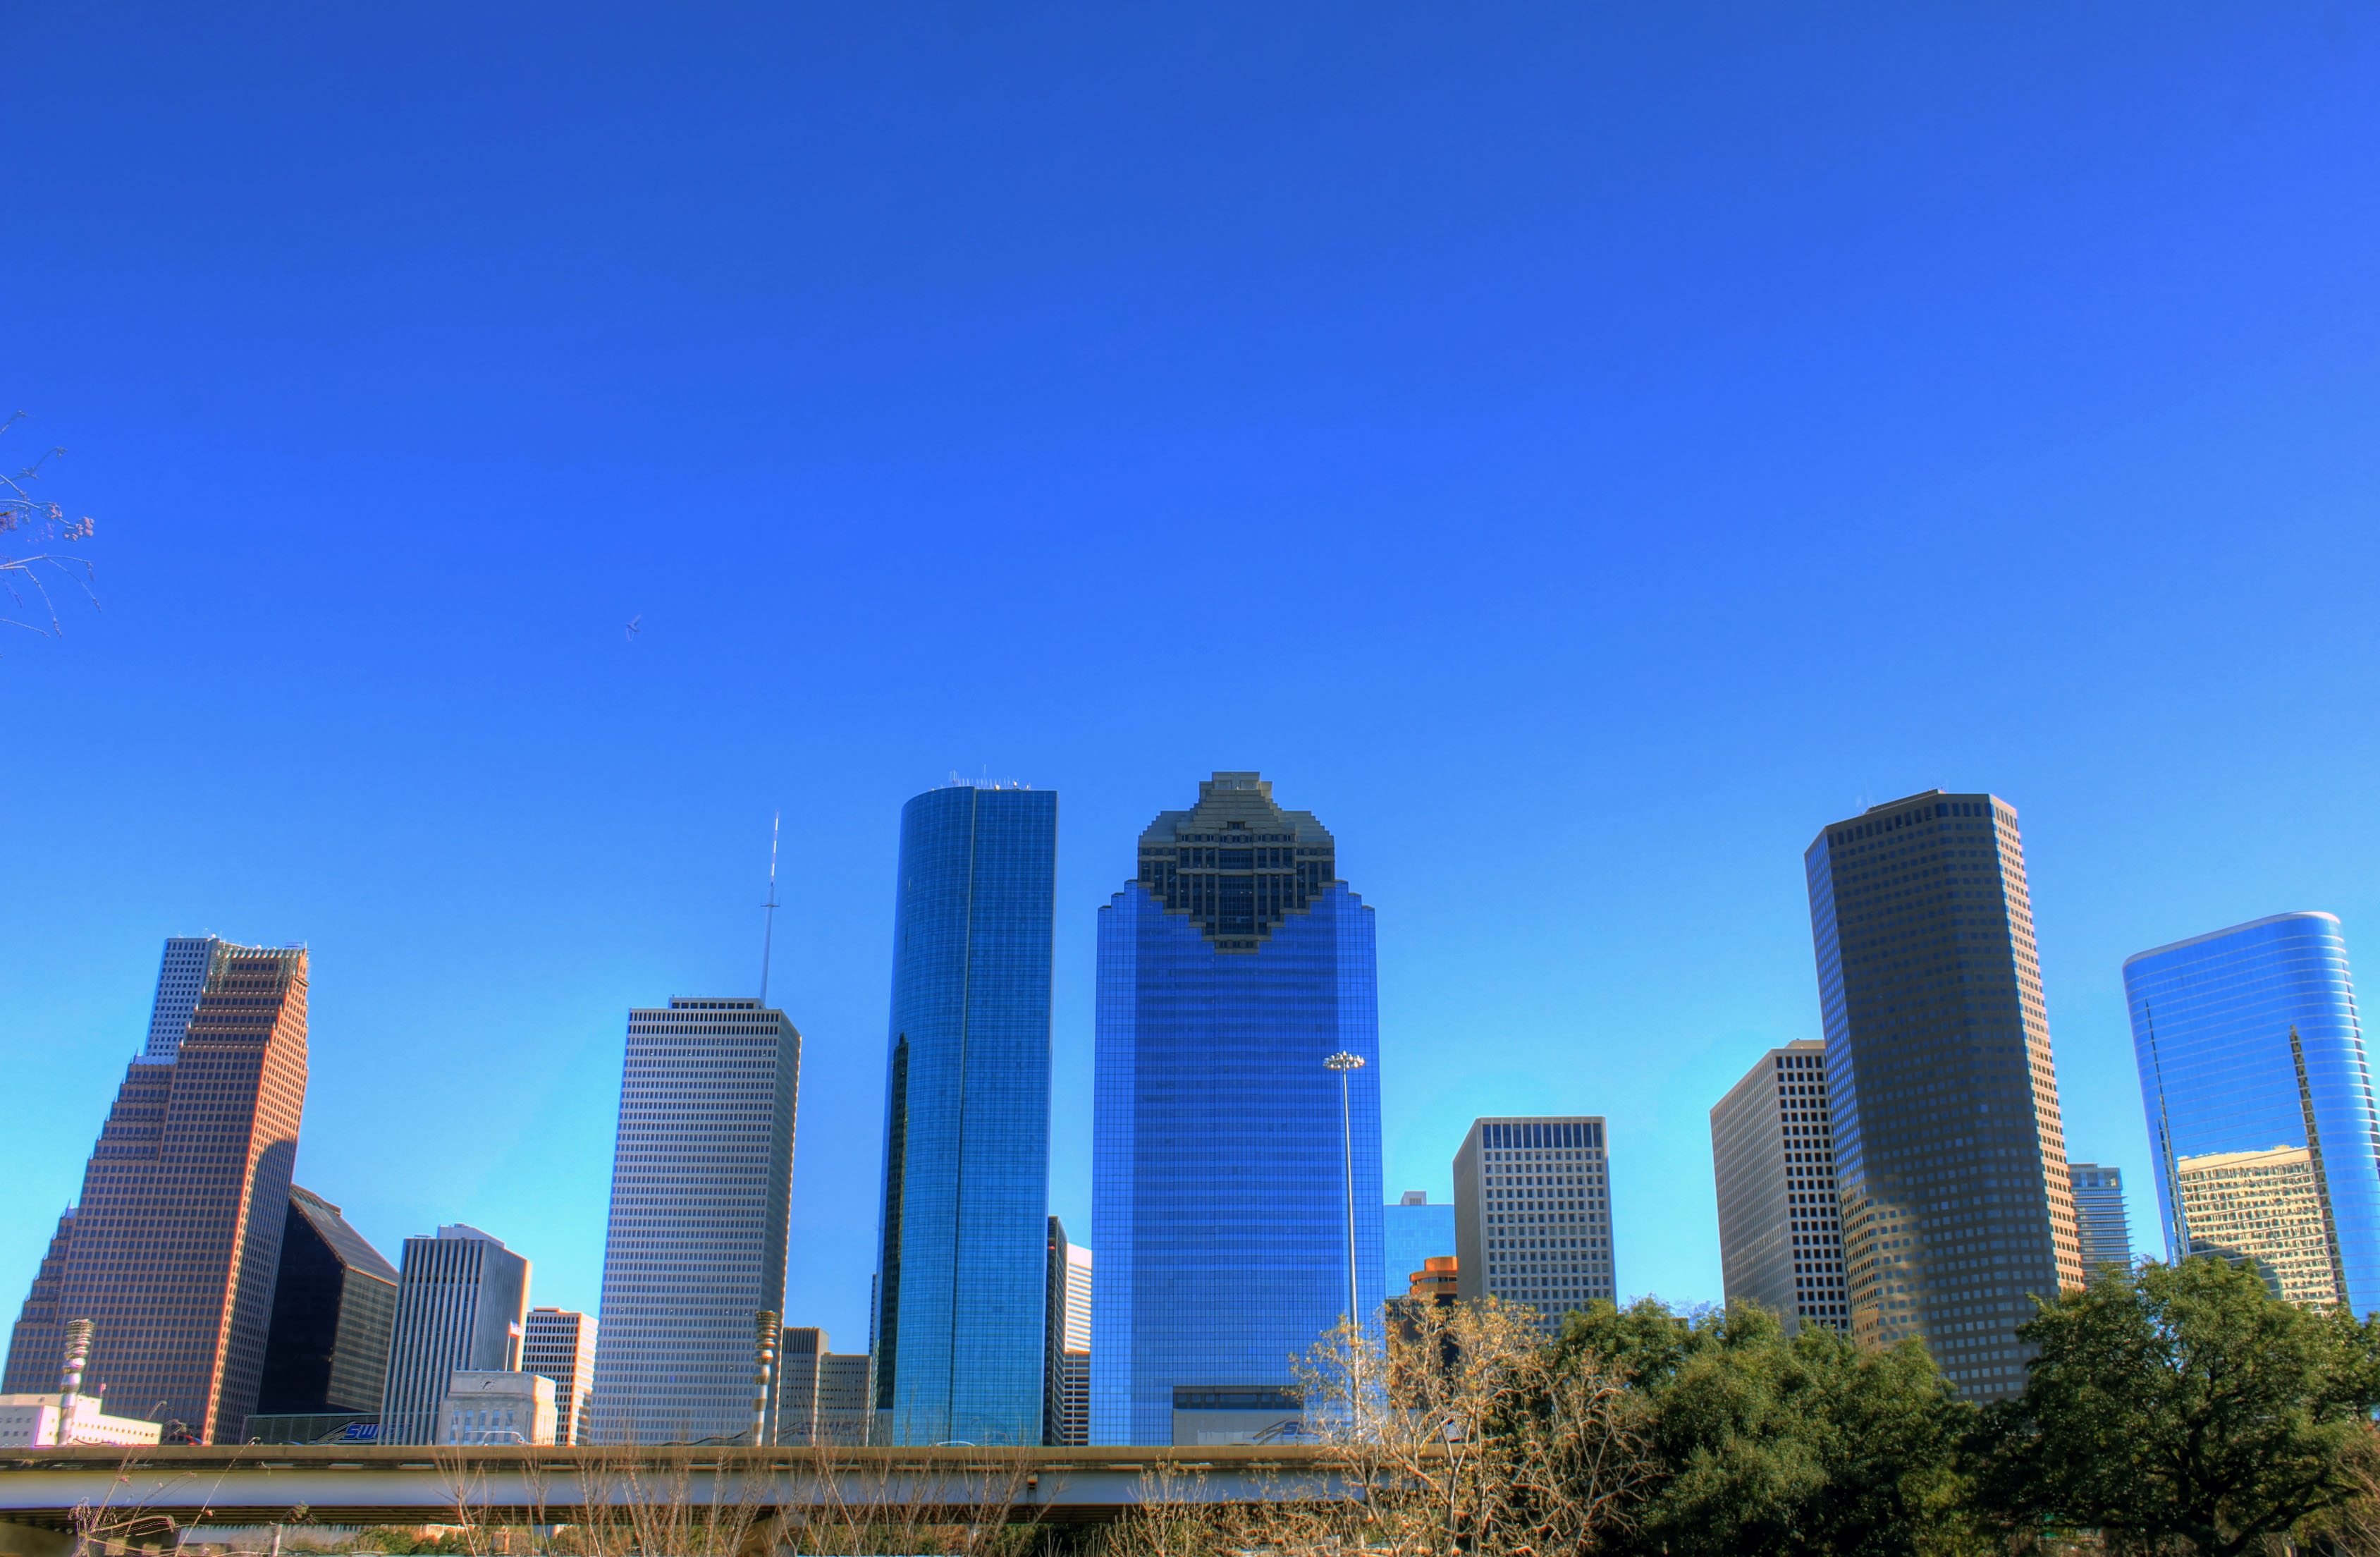 Houston Skyline in Houston, Texas image - Free stock photo - Public